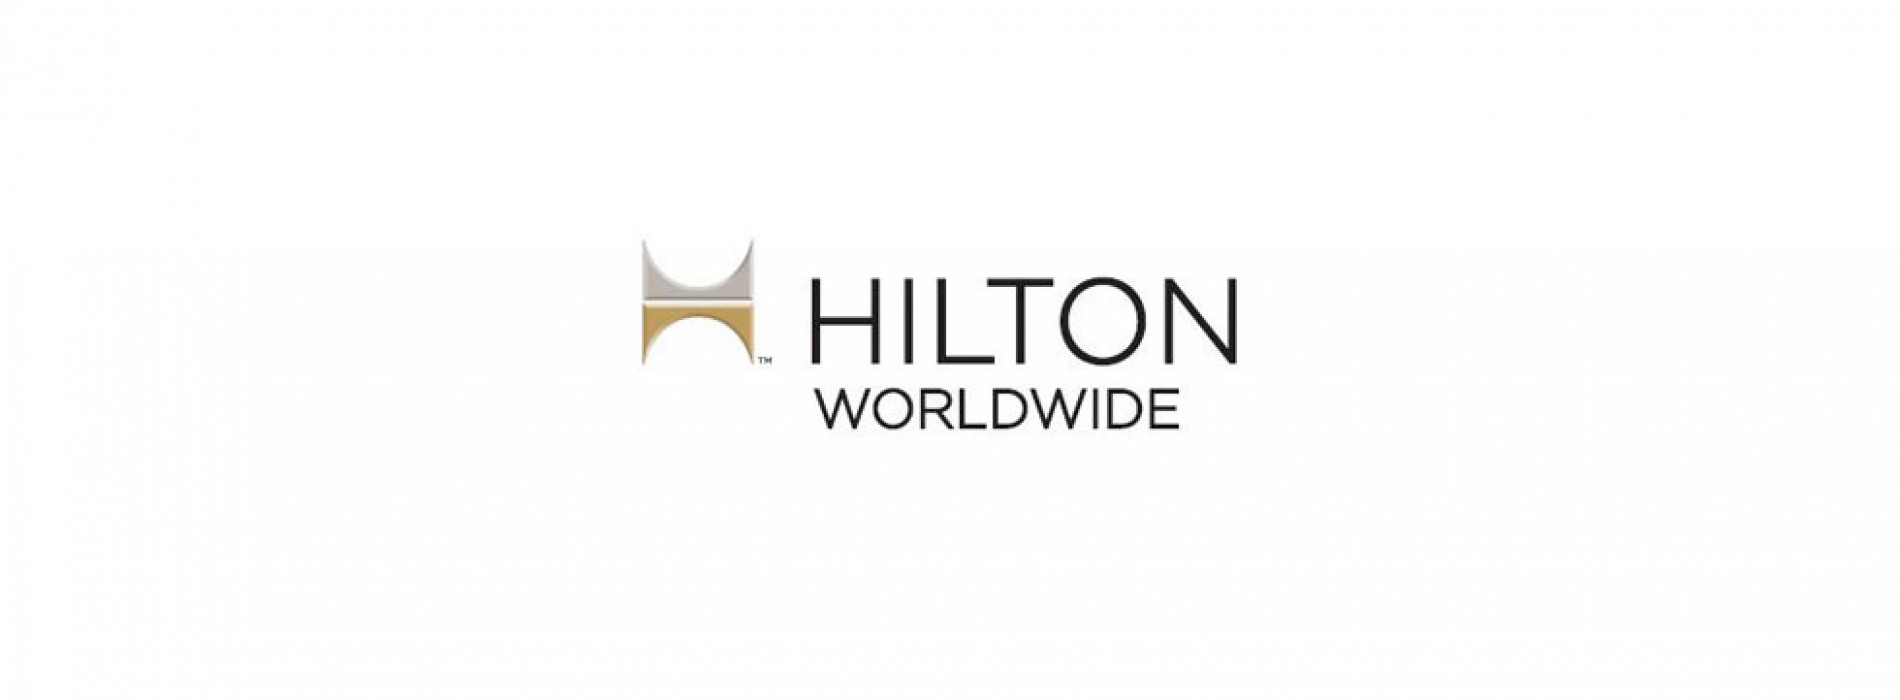 Hilton Worldwide 2016 India showcases a resounding success